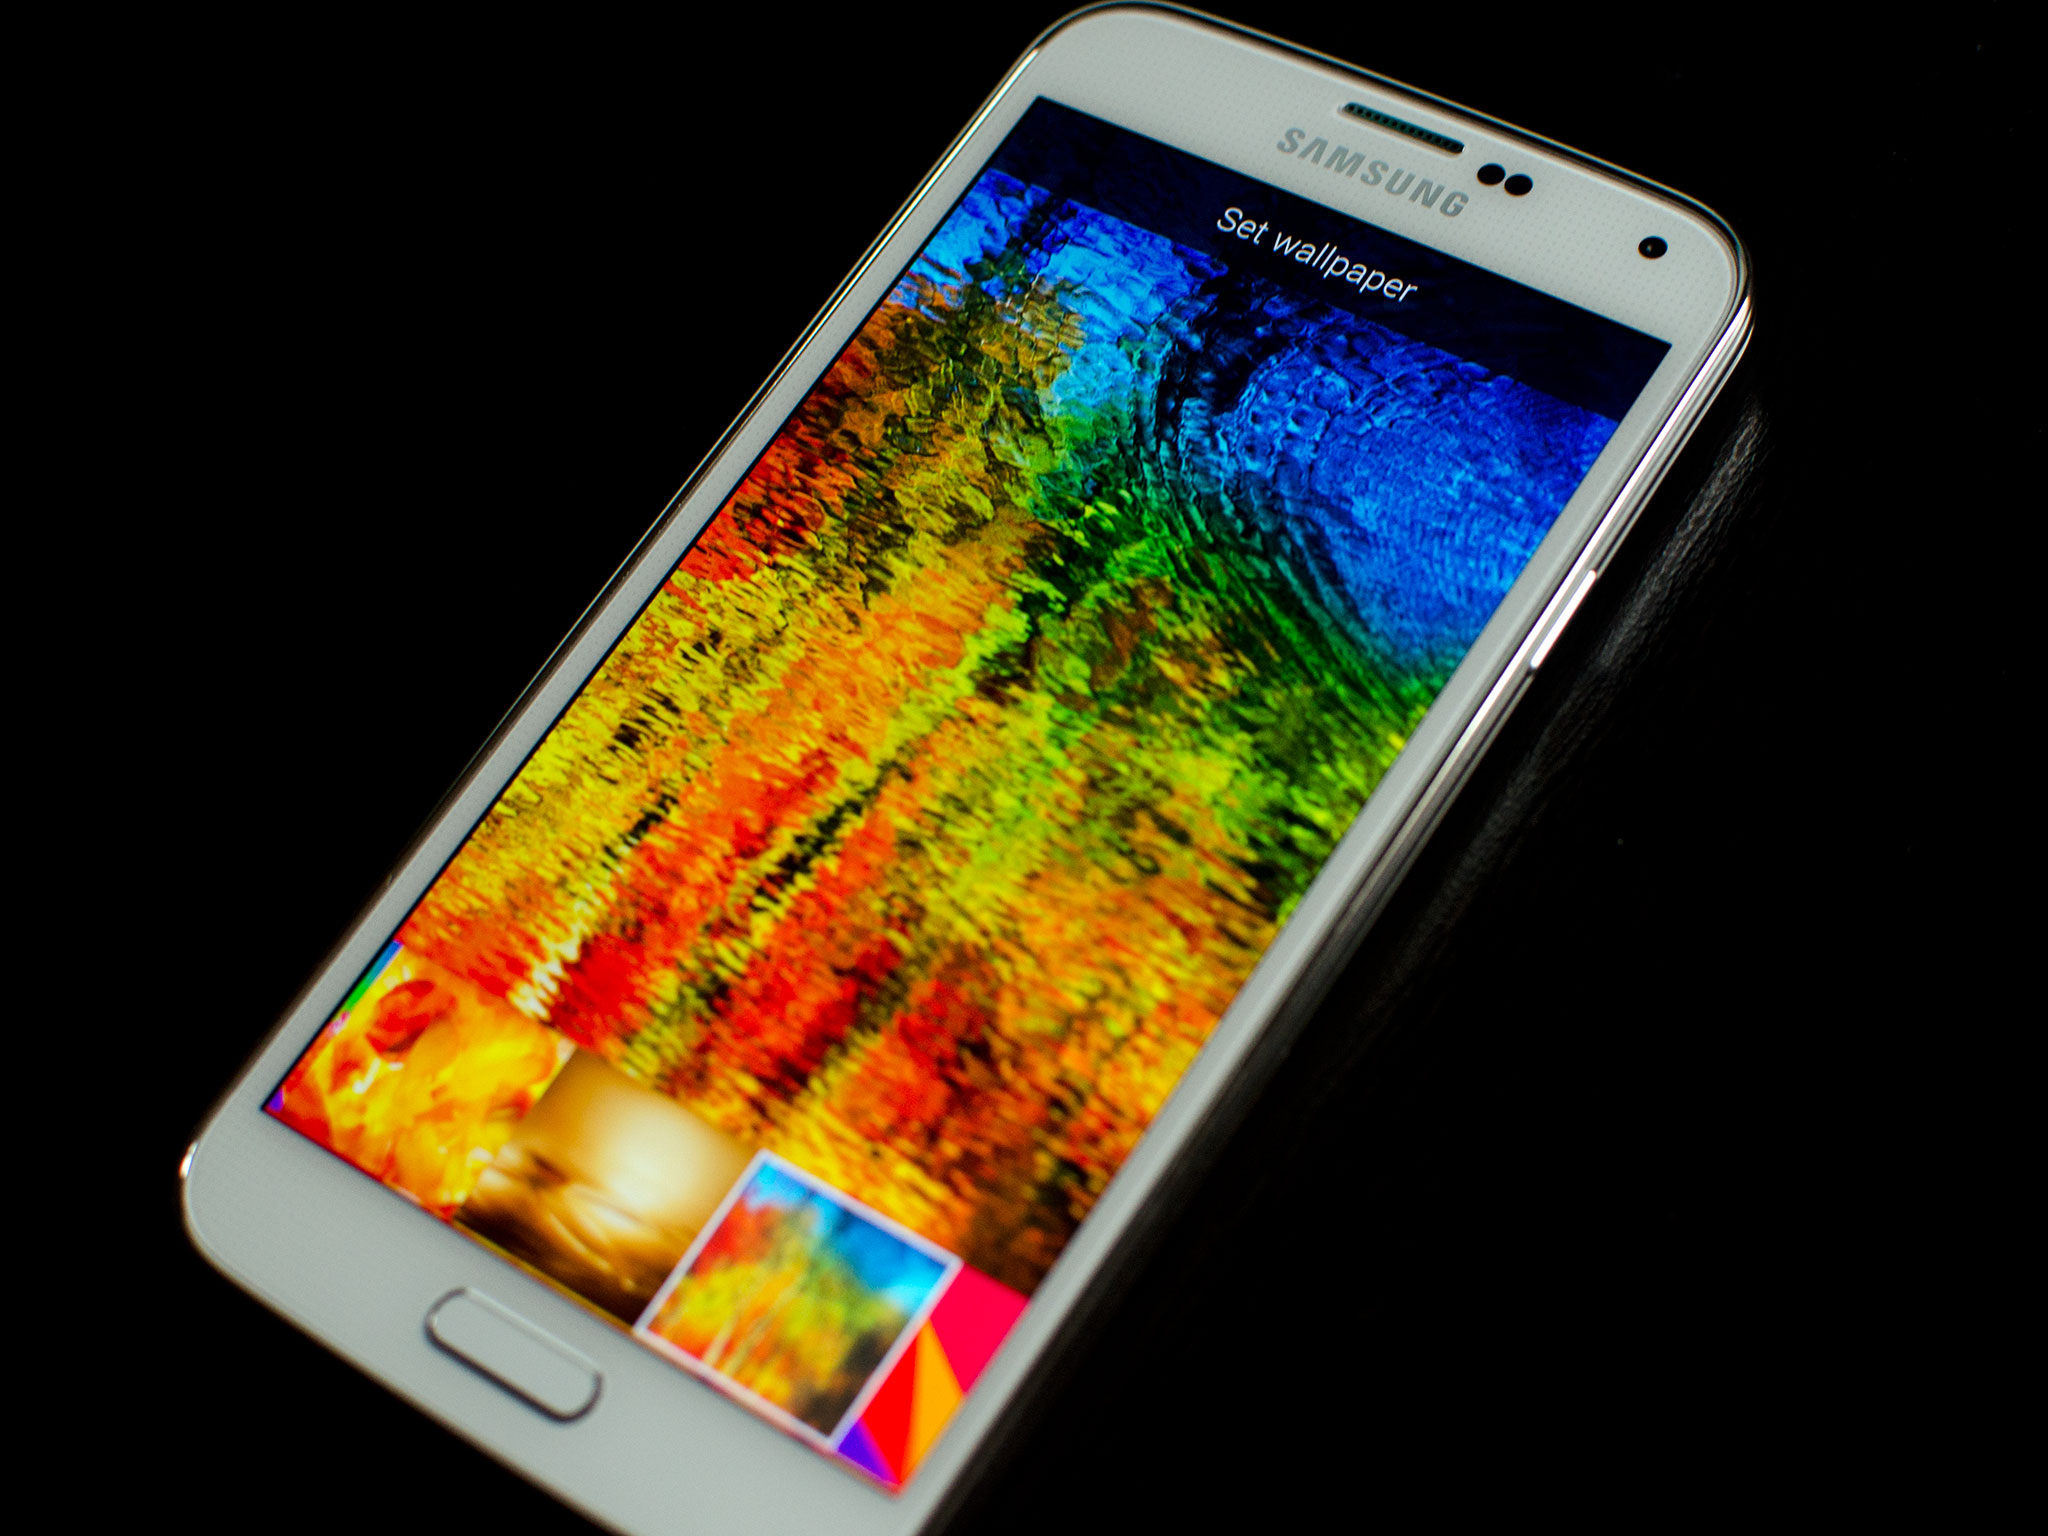 wallpaper on the Samsung Galaxy S5